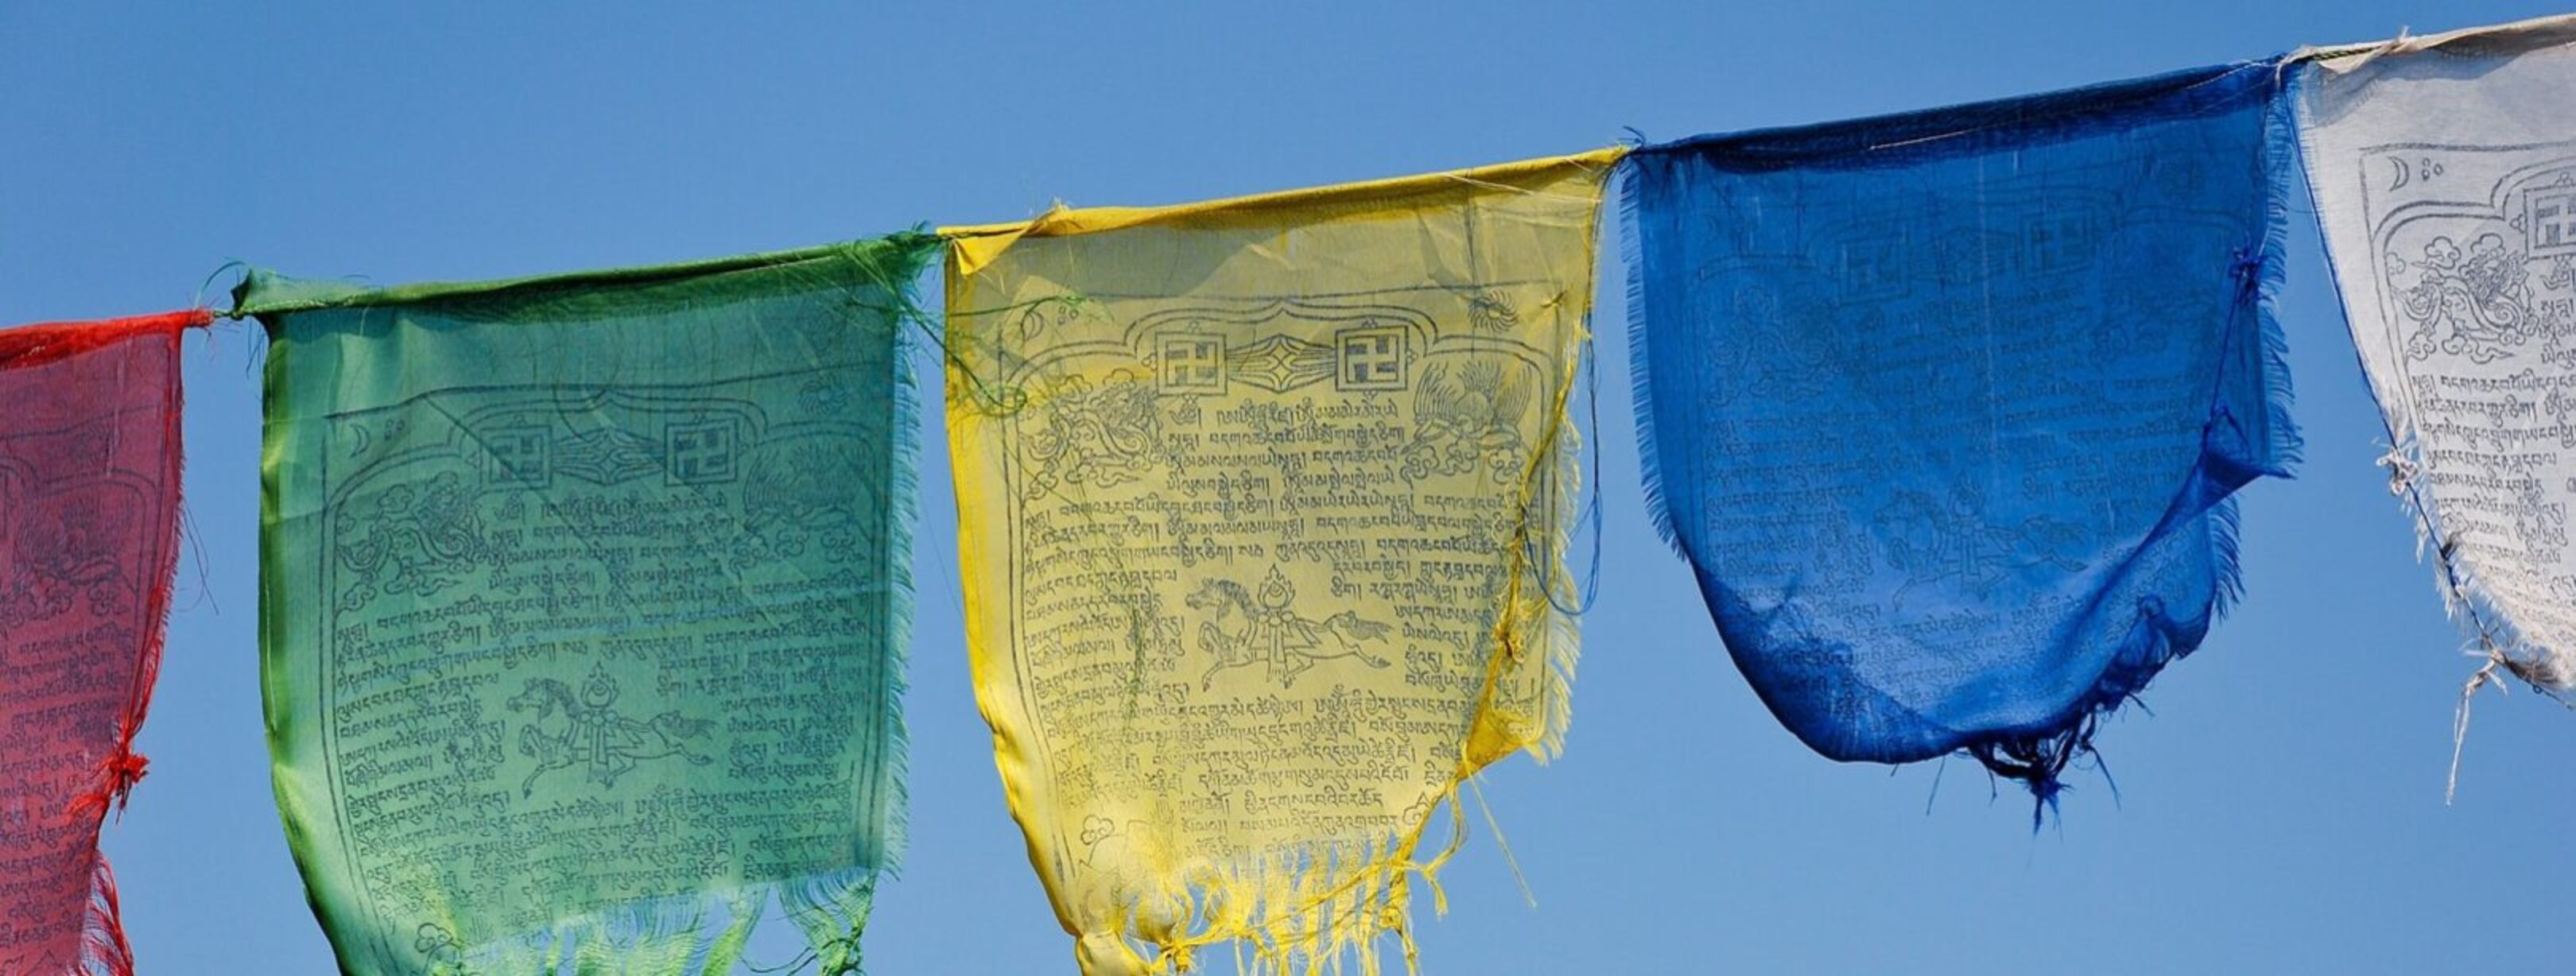 1620-Buddhist_prayer_flags_by Markus Koljonen_wikimediacommons